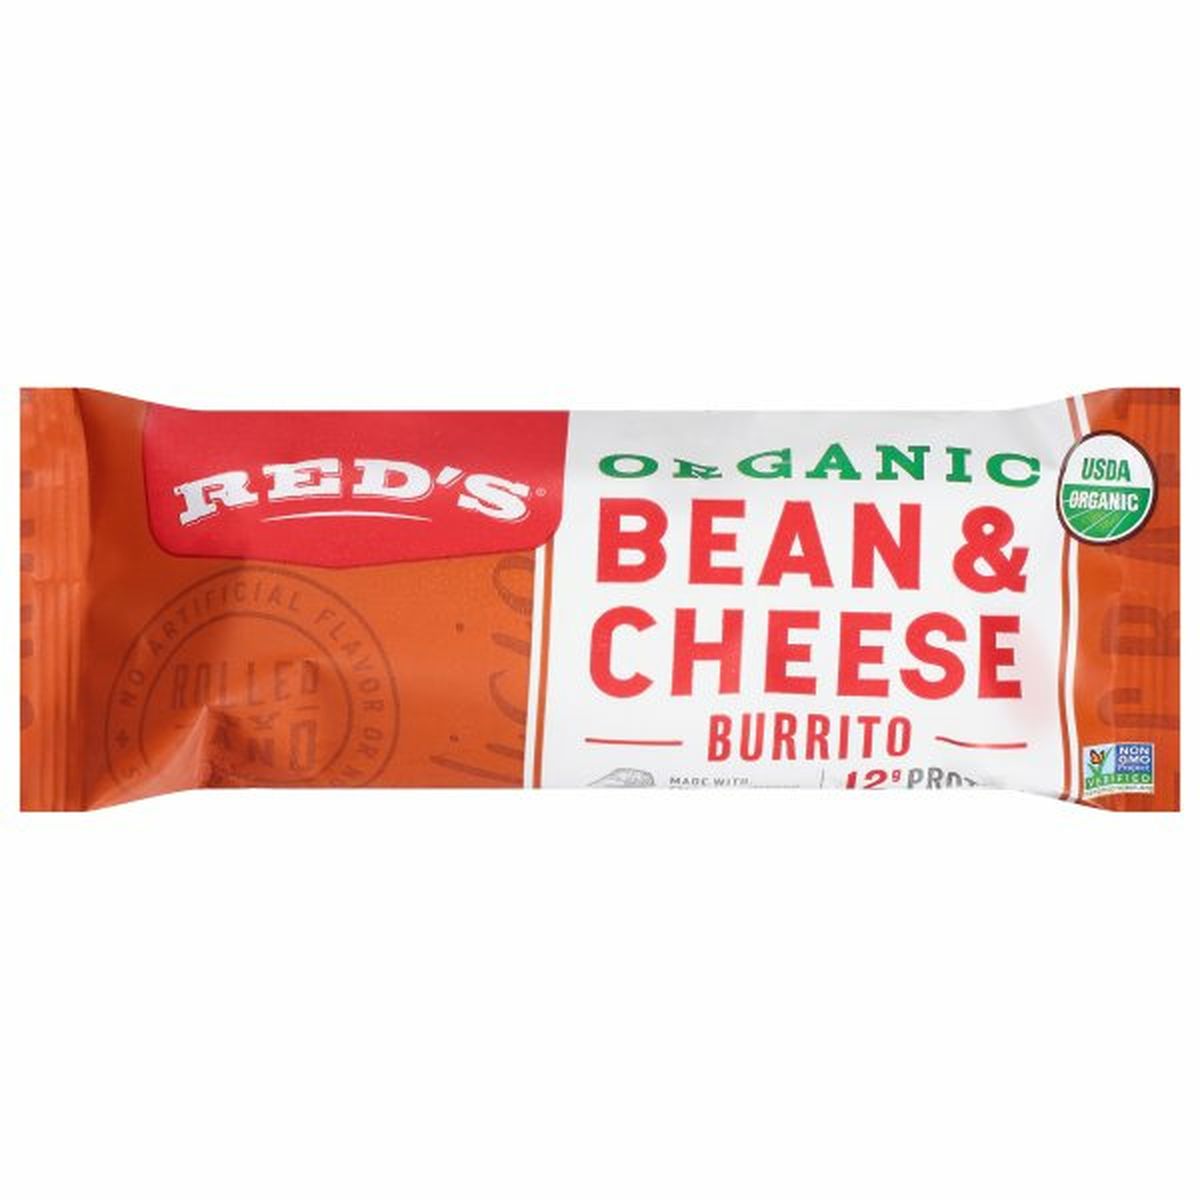 Calories in Reds Burrito, Organic, Bean & Cheese